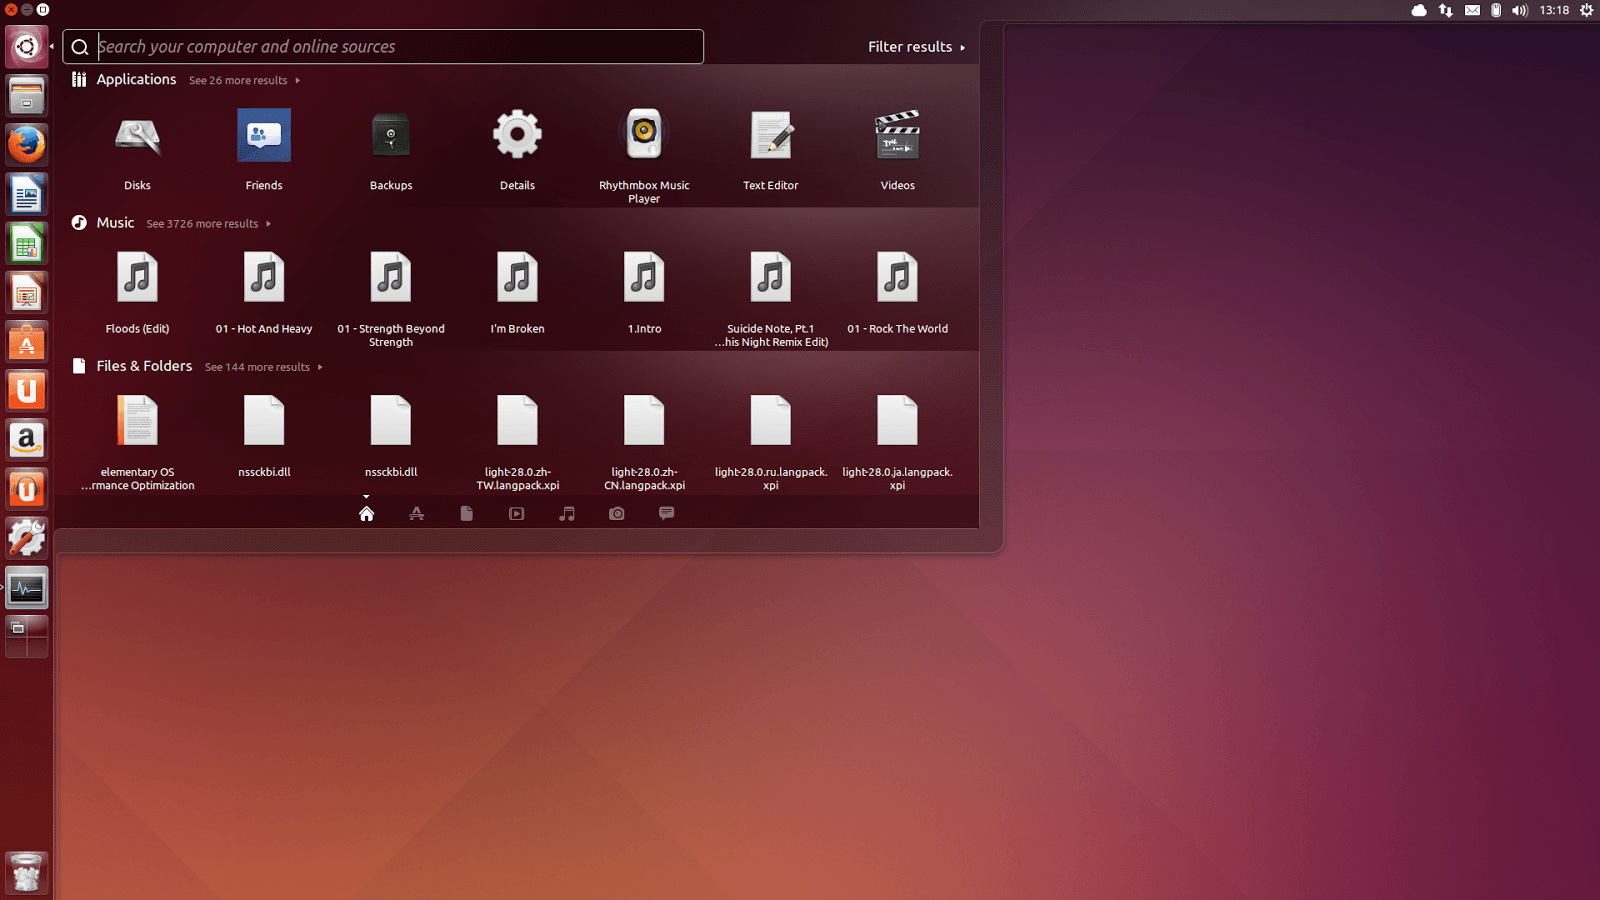 Ubuntu Linux de Canonical